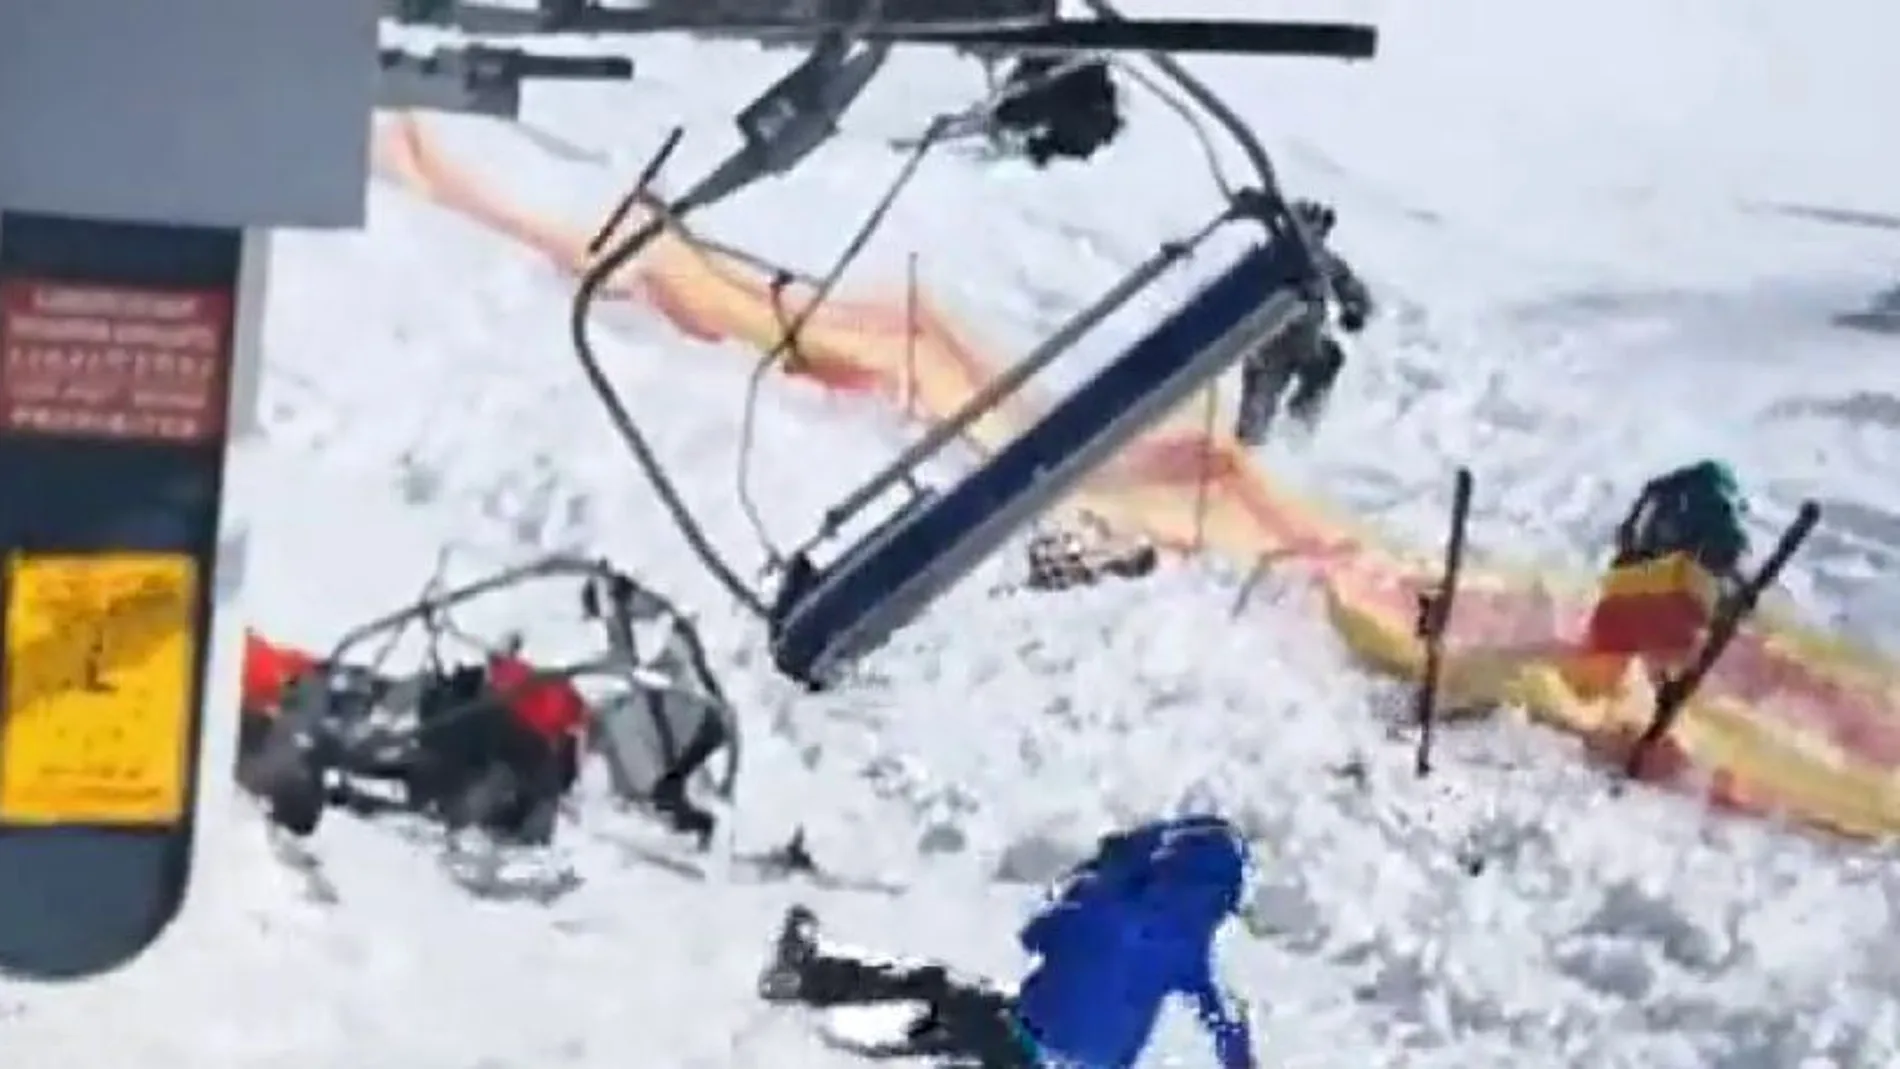 Esquiadores salen expulsados del telesilla por un fallo técnico